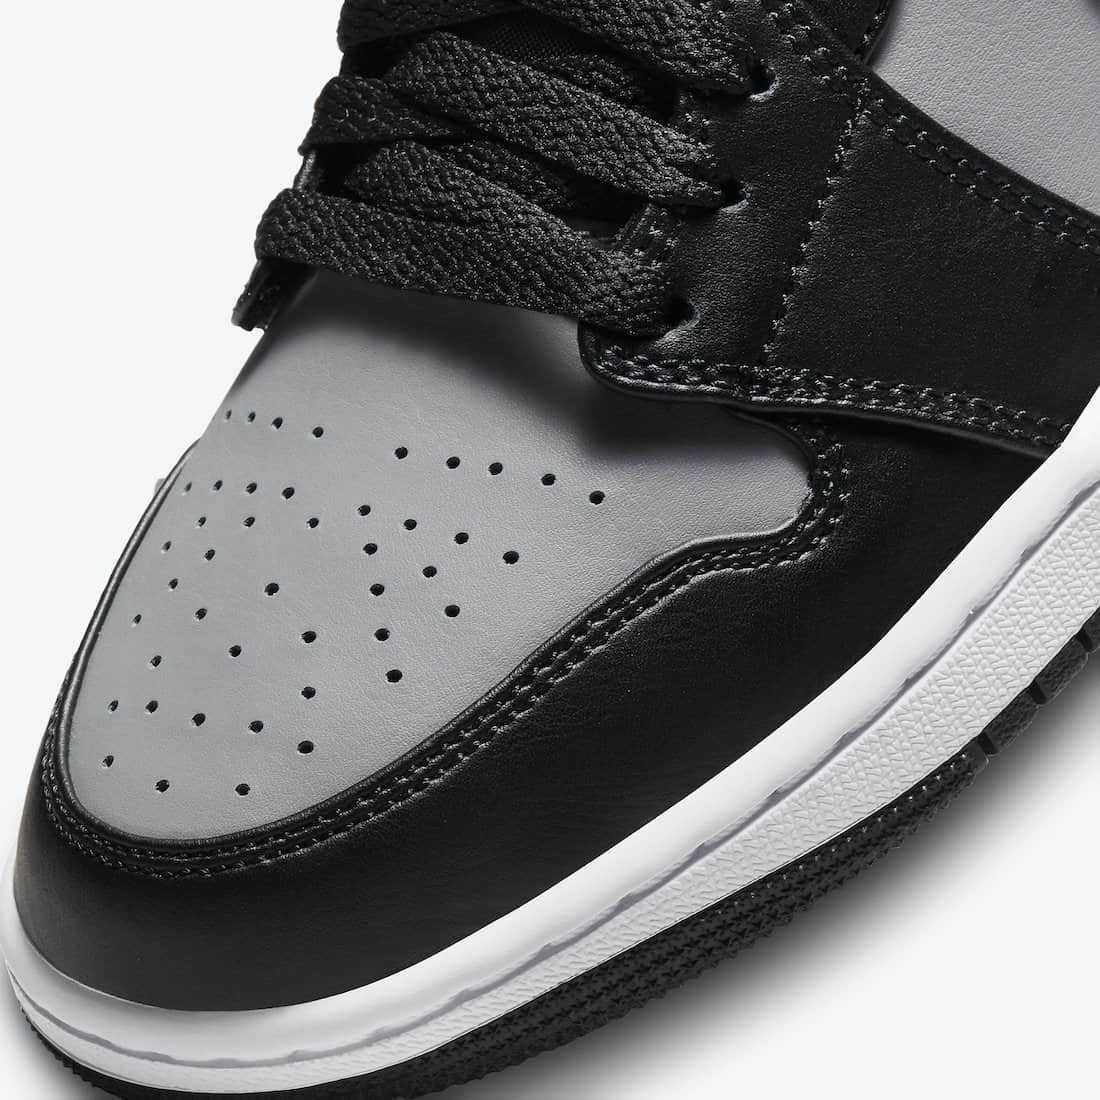 Air Jordan 1 Mid 'Shadow' 554724-096 - Icy Style for Street Sneakerheads